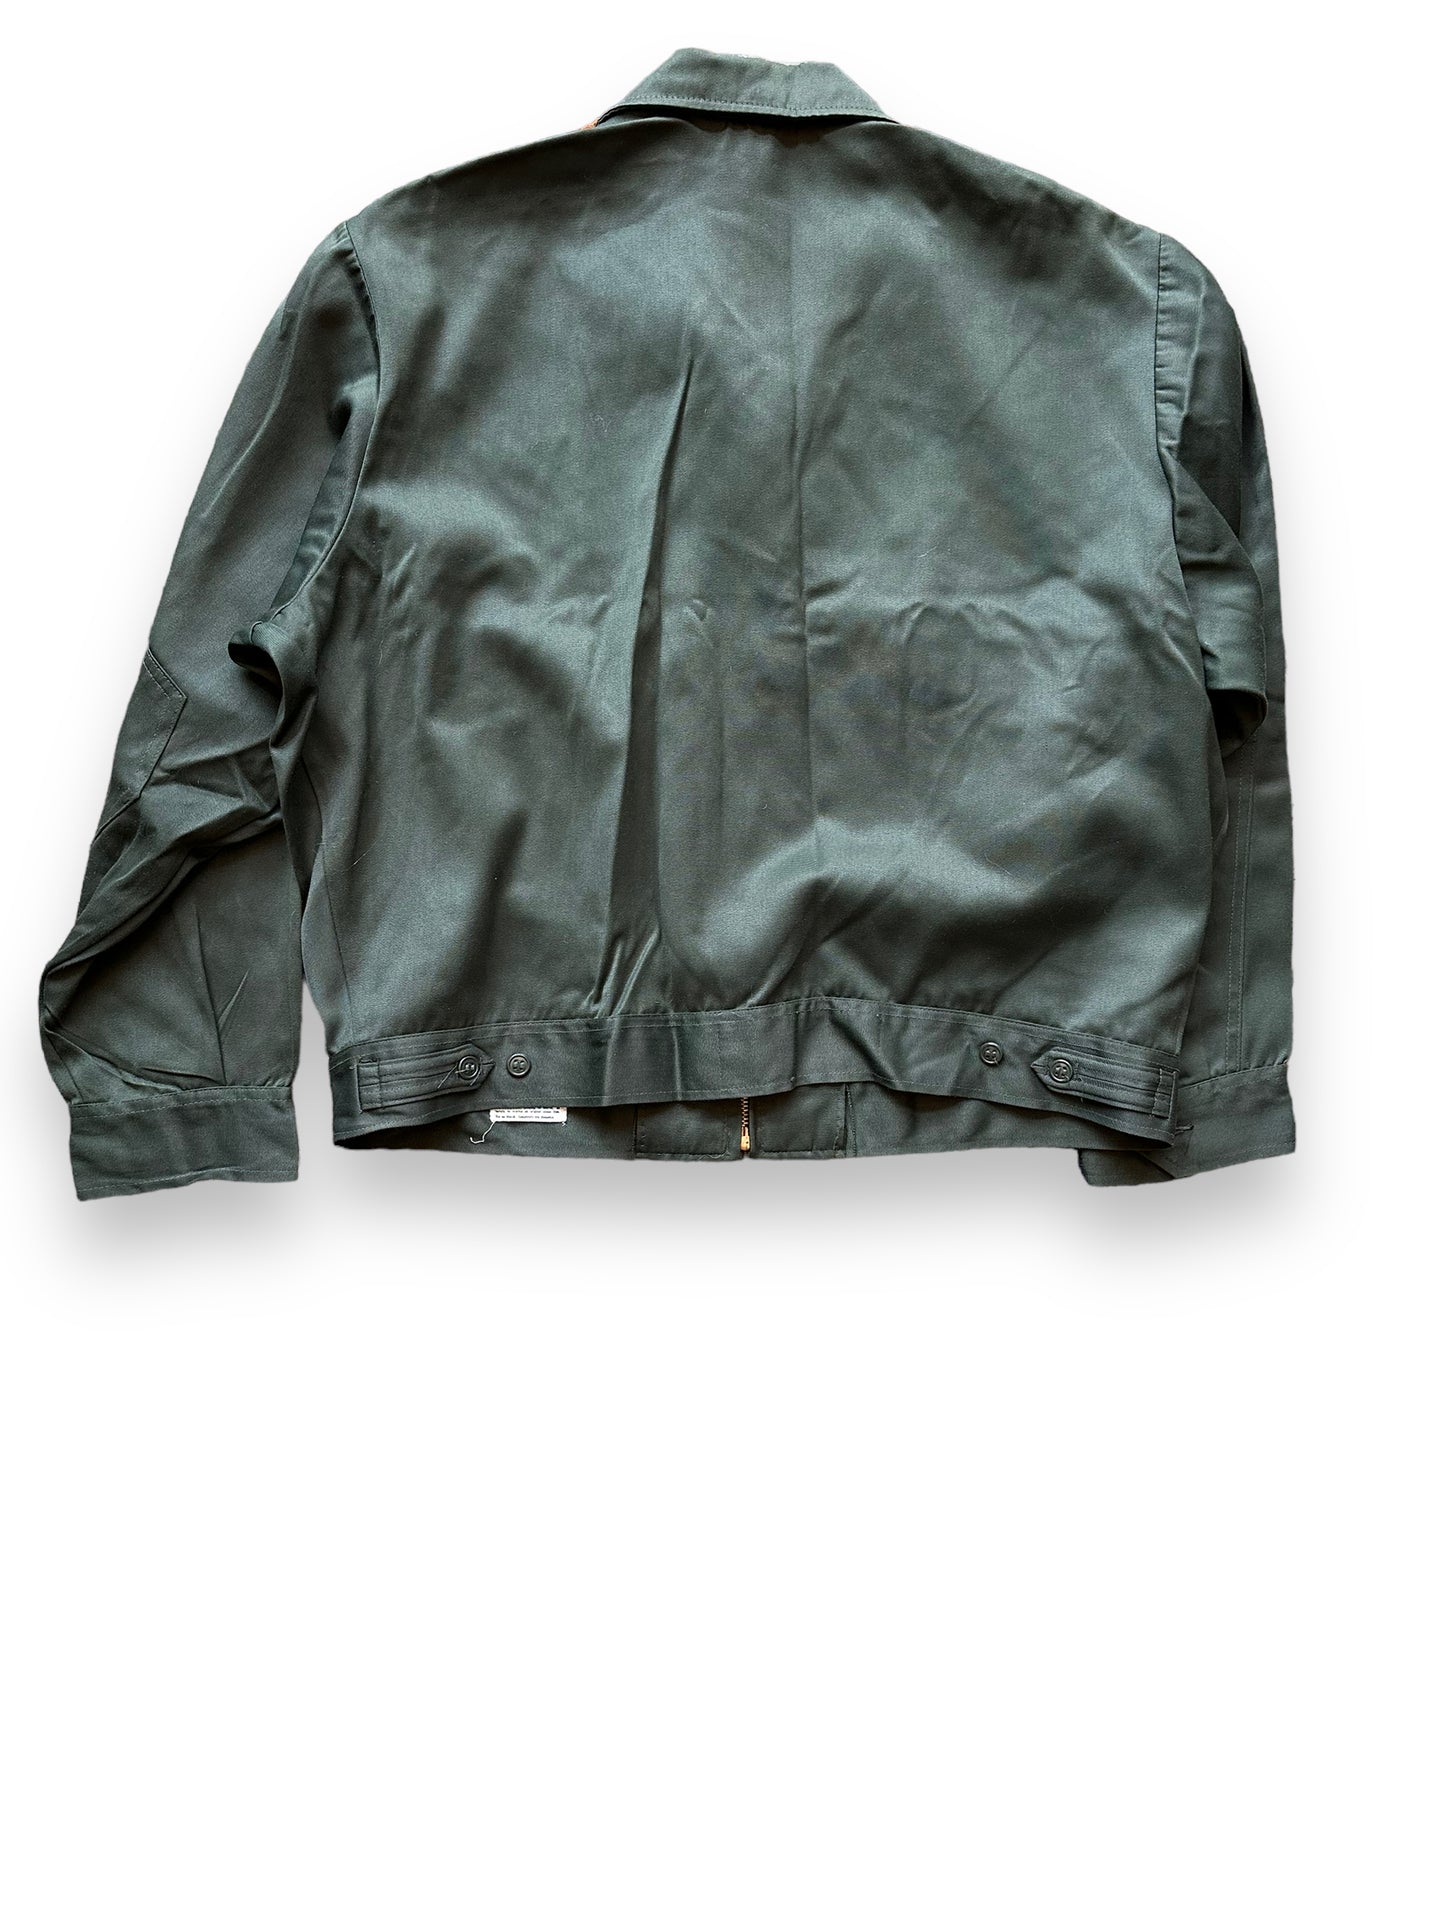 Rear View of Vintage Mr 2-Ply Slate Green Gas Station Jacket SZ 48 | Vintage Workwear Jacket Seattle | Seattle Vintage Clothing